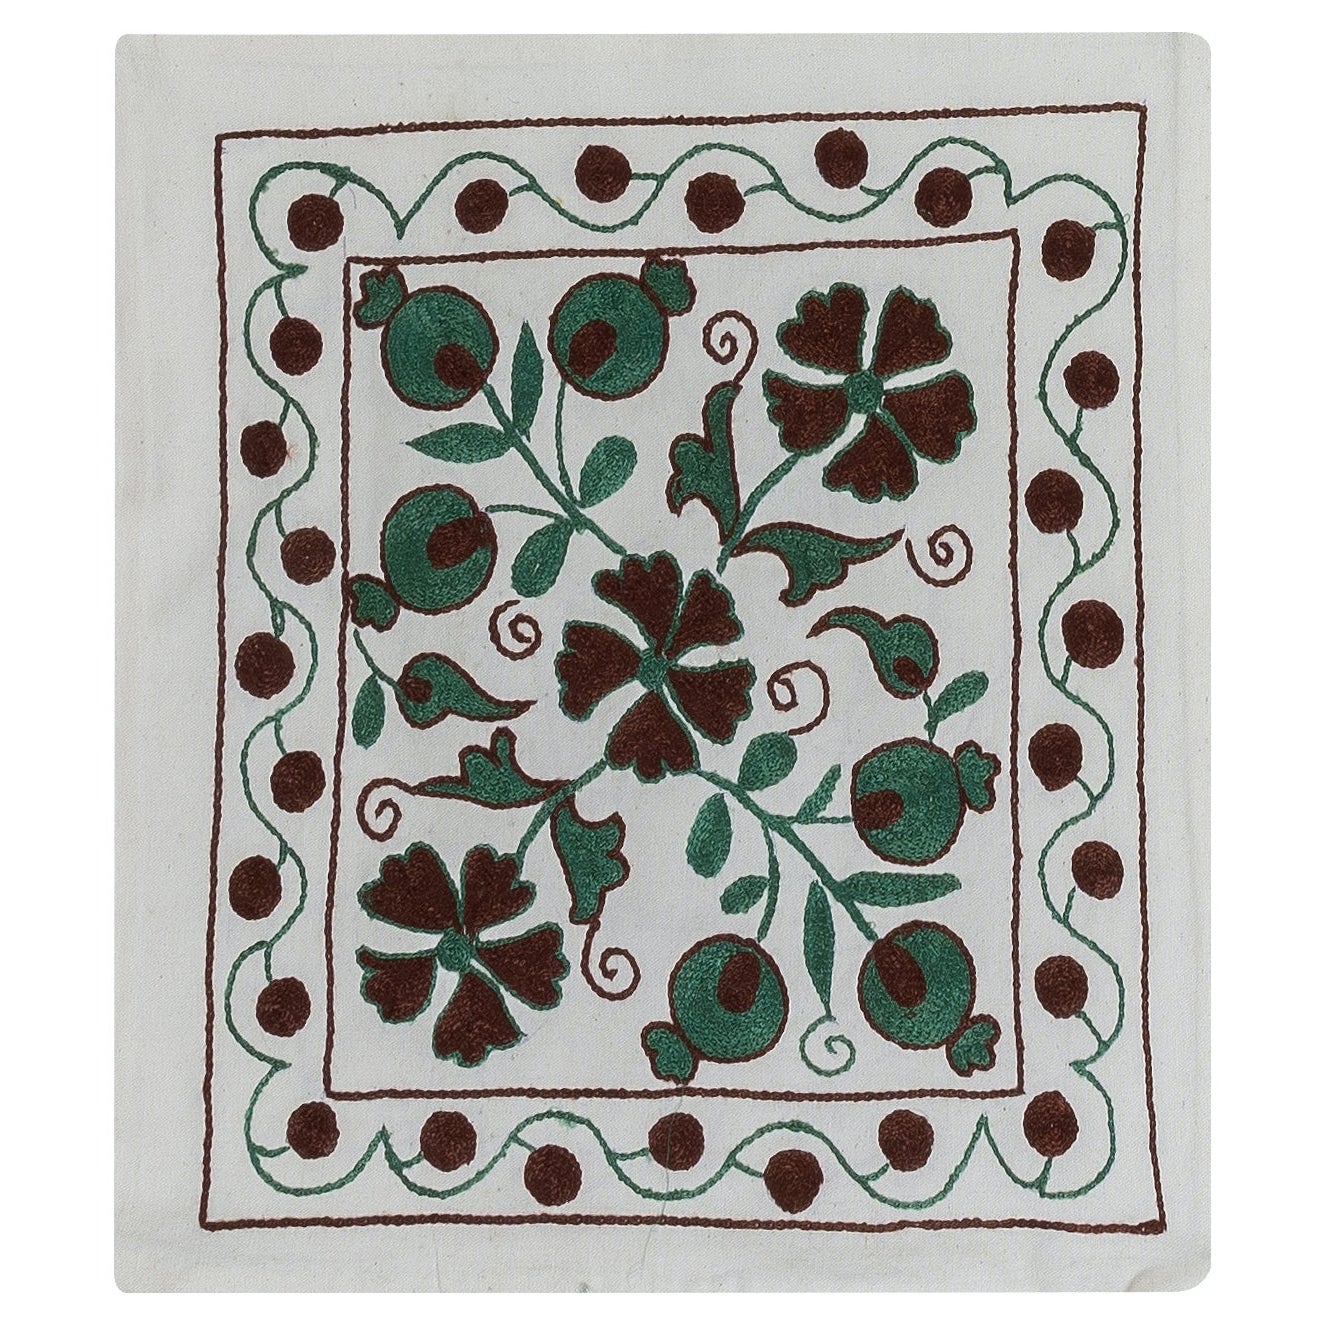 Uzbek Silk Embroidery Lace Pillow Cover, Handmade Suzani Textile Pillow For Sale